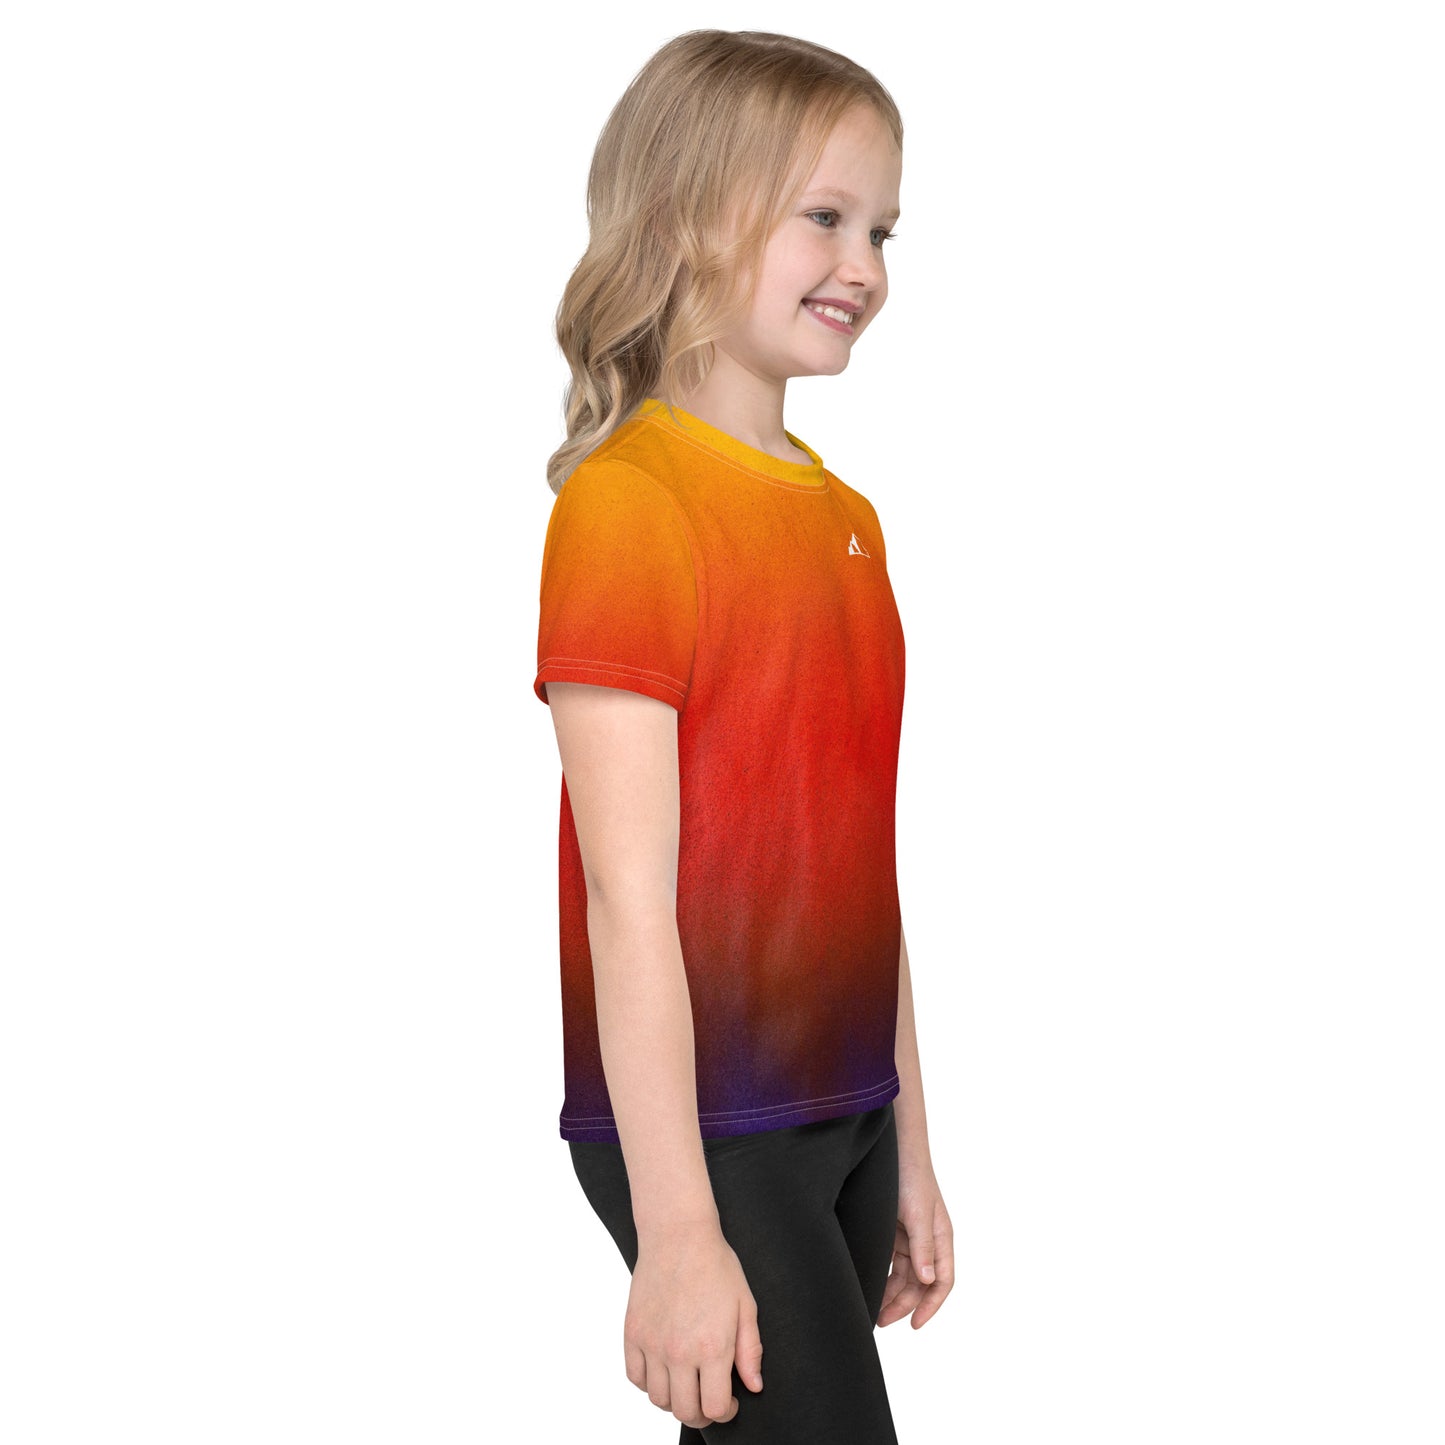 “Sunrise” Kids crew neck t-shirt right